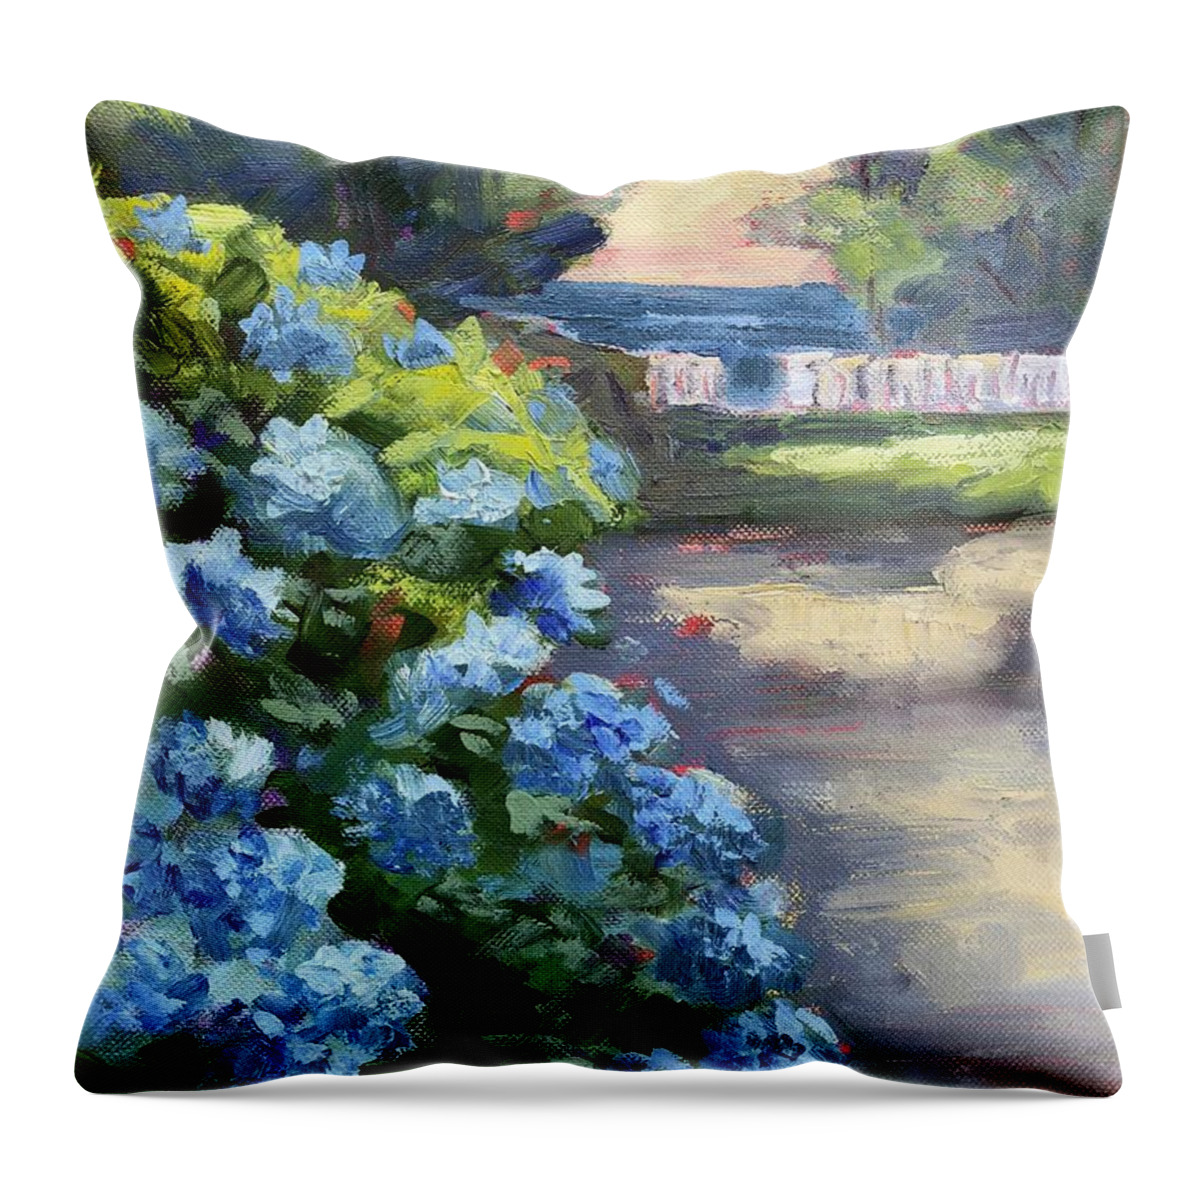 Blue Hydrangea Throw Pillow featuring the painting Hydrangea Sunrise by Barbara Hageman